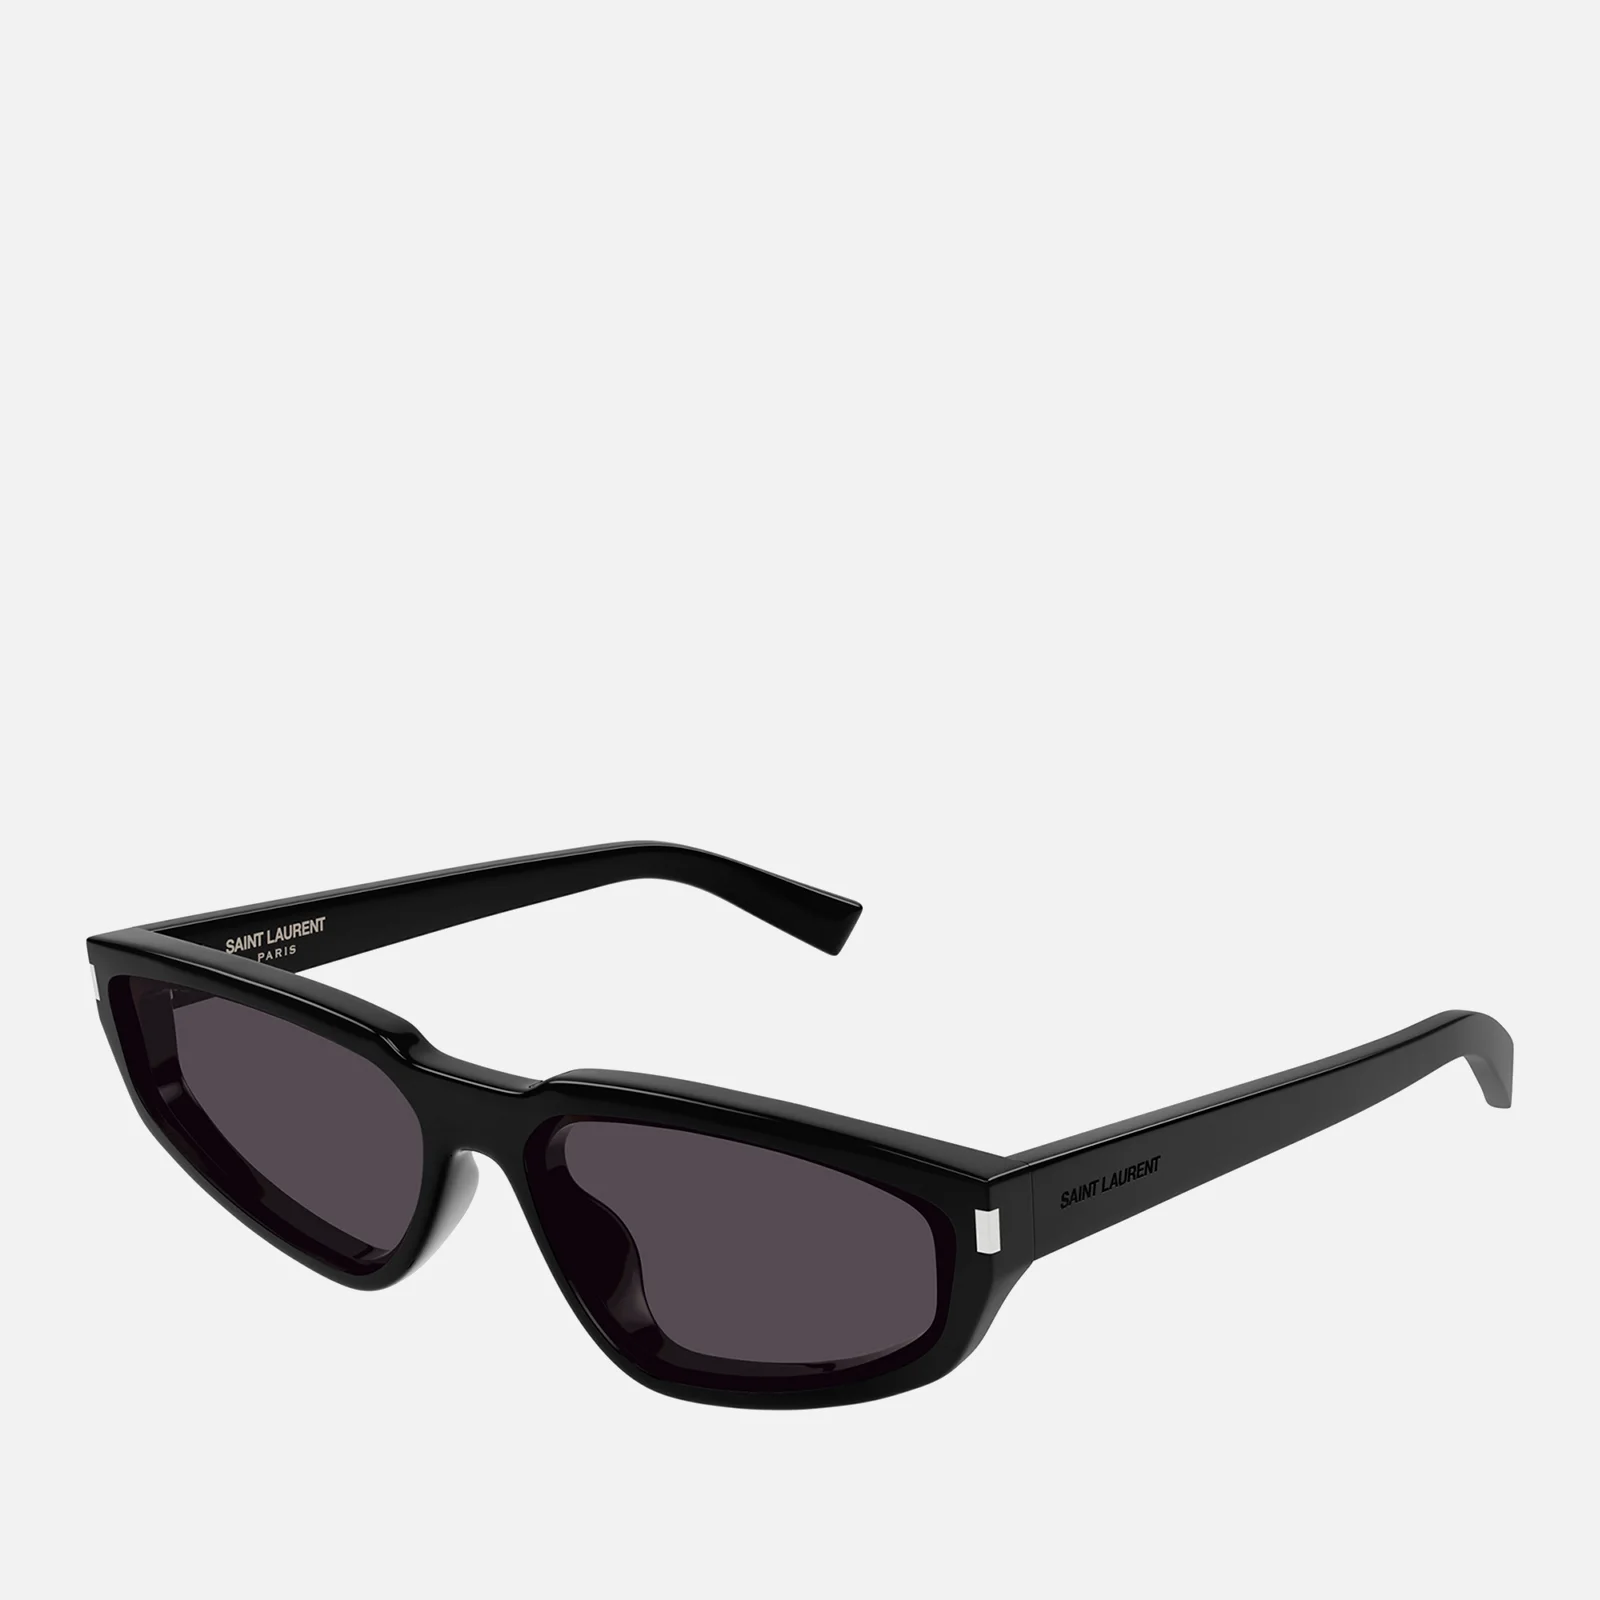 Saint Laurent Nova Recycled Acetate Cat Eye Sunglasses Image 1